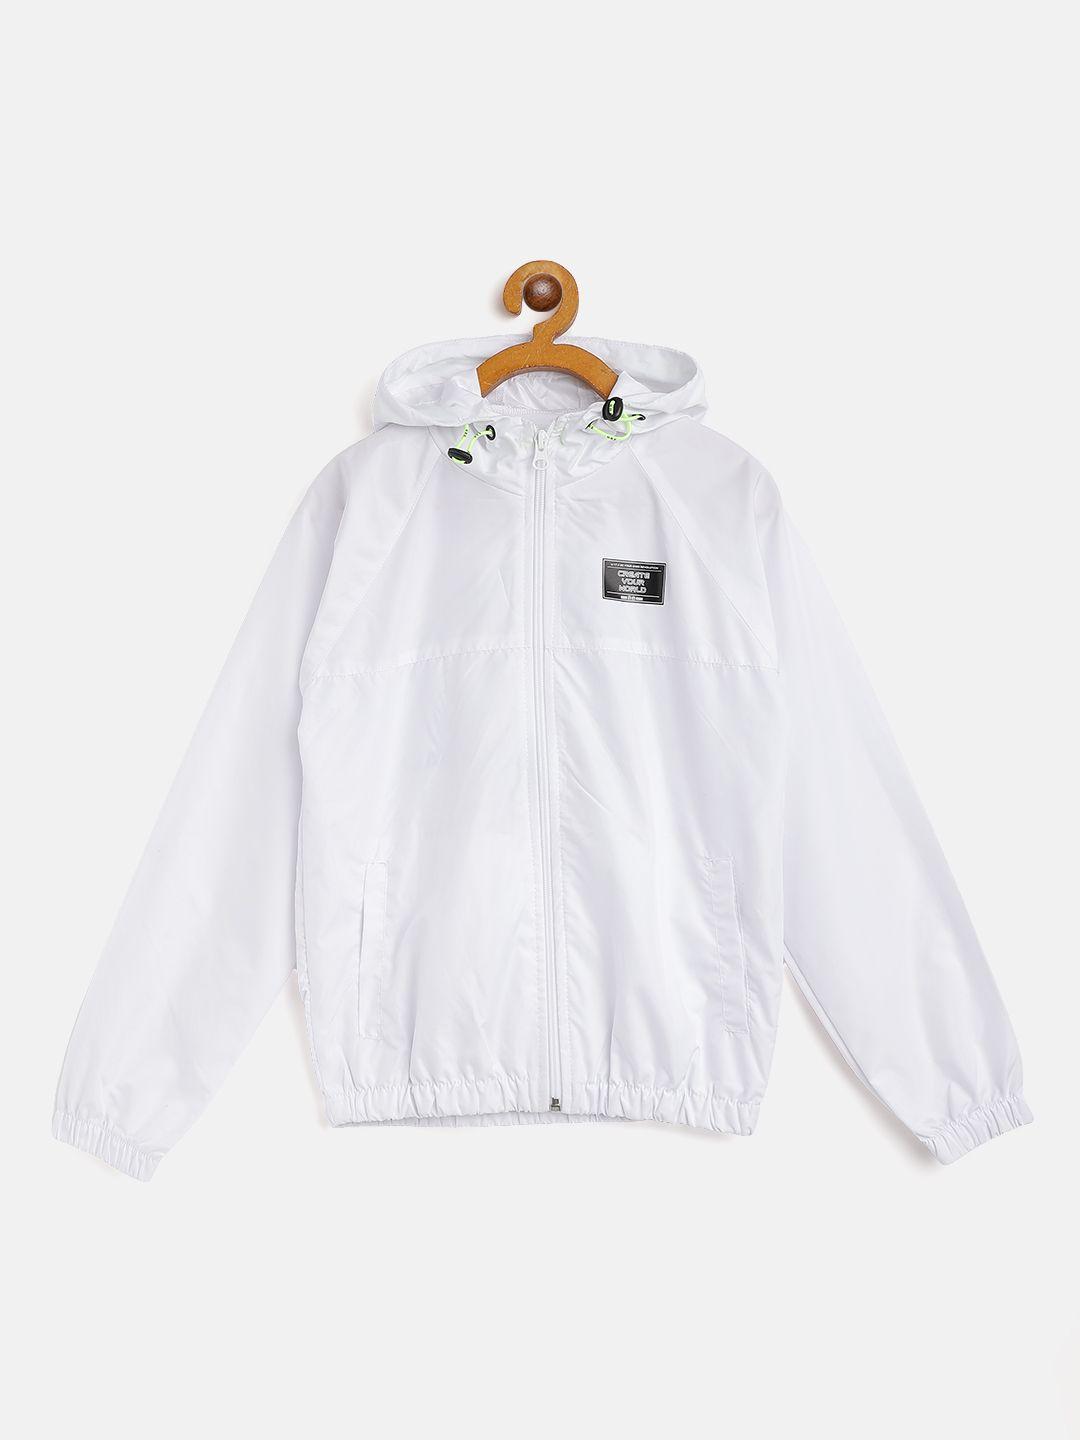 hrx by hrithik roshan u-17 lifestyle boys bright white rapid-dry hooded bomber jacket